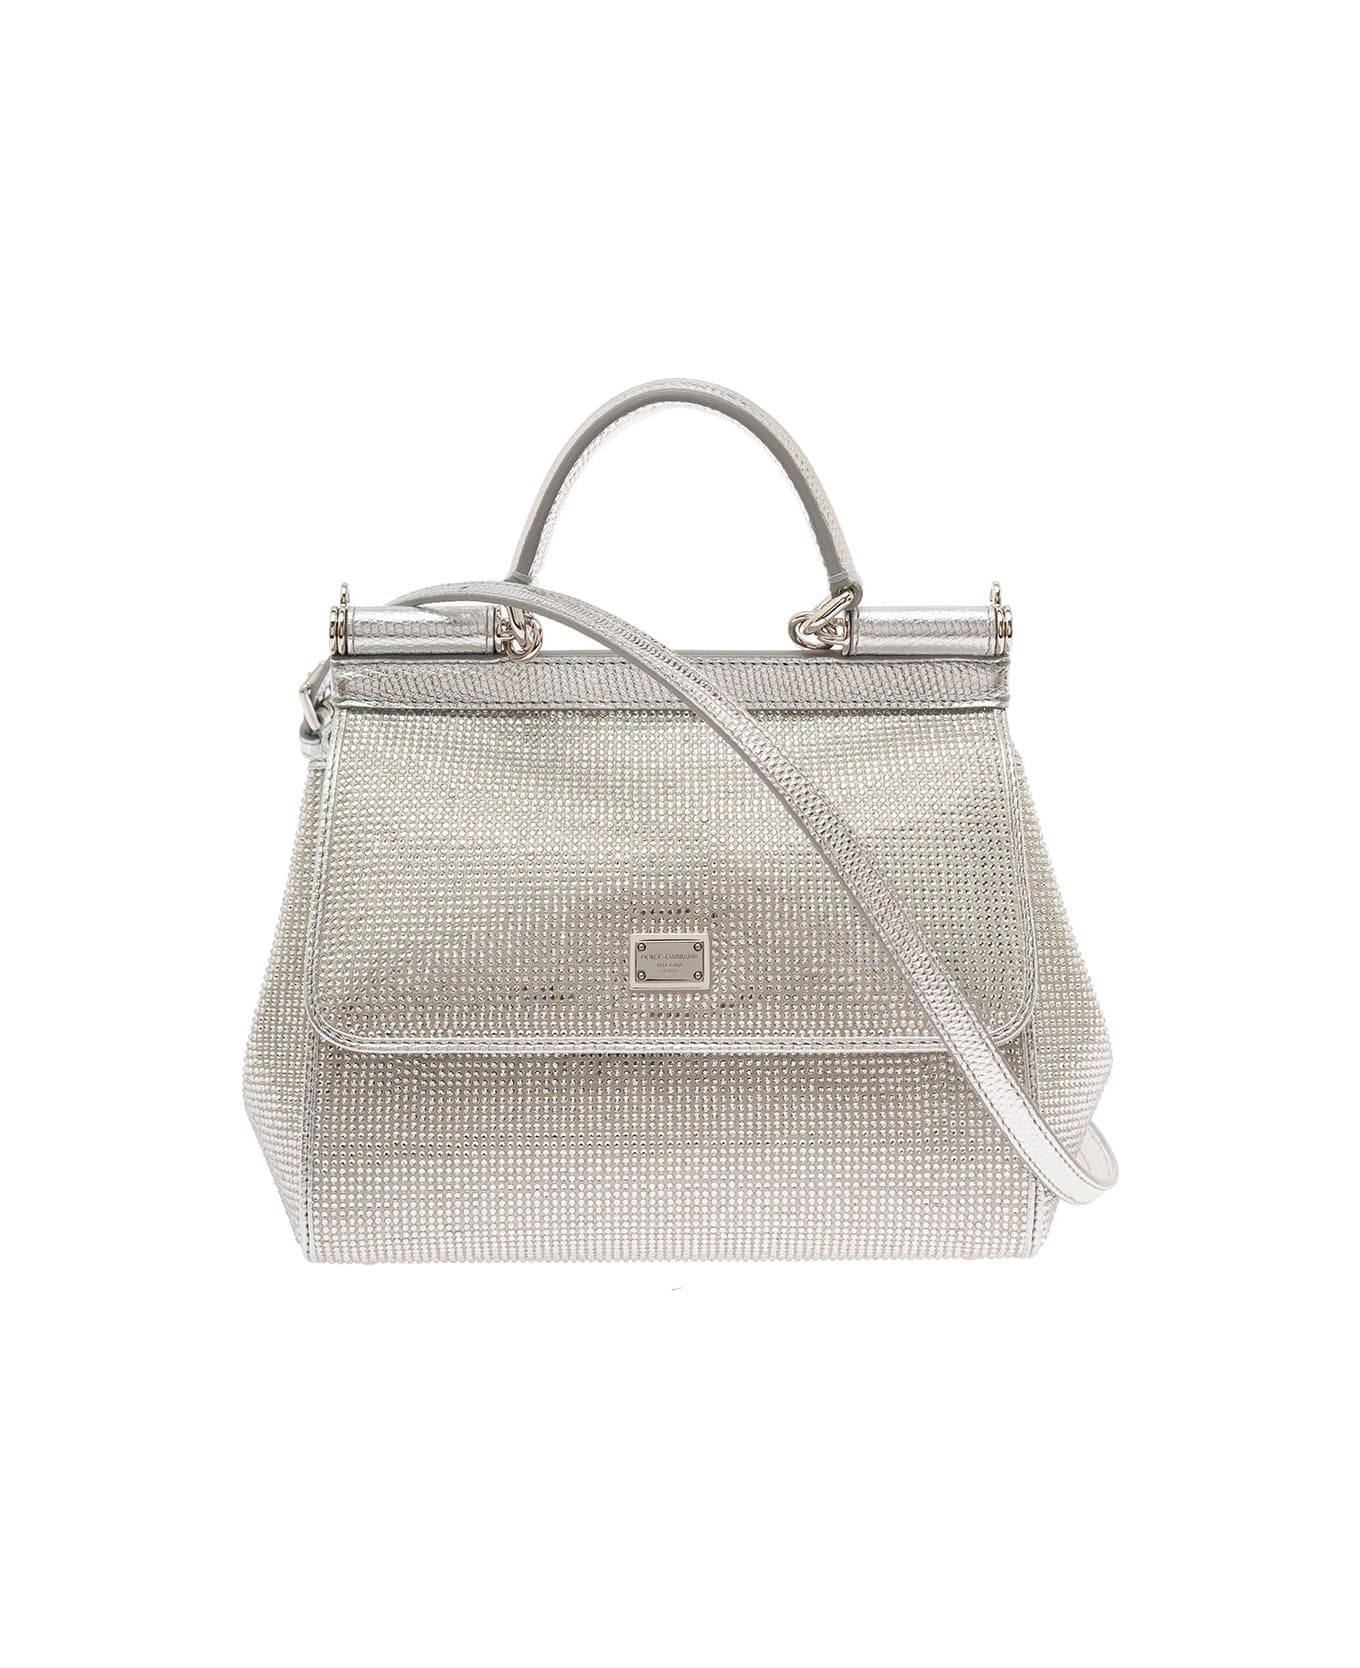 Dolce & Gabbana Silver-tone Sicily Medium Handbag With Crystal Embellishment All-over Woman - Metallic